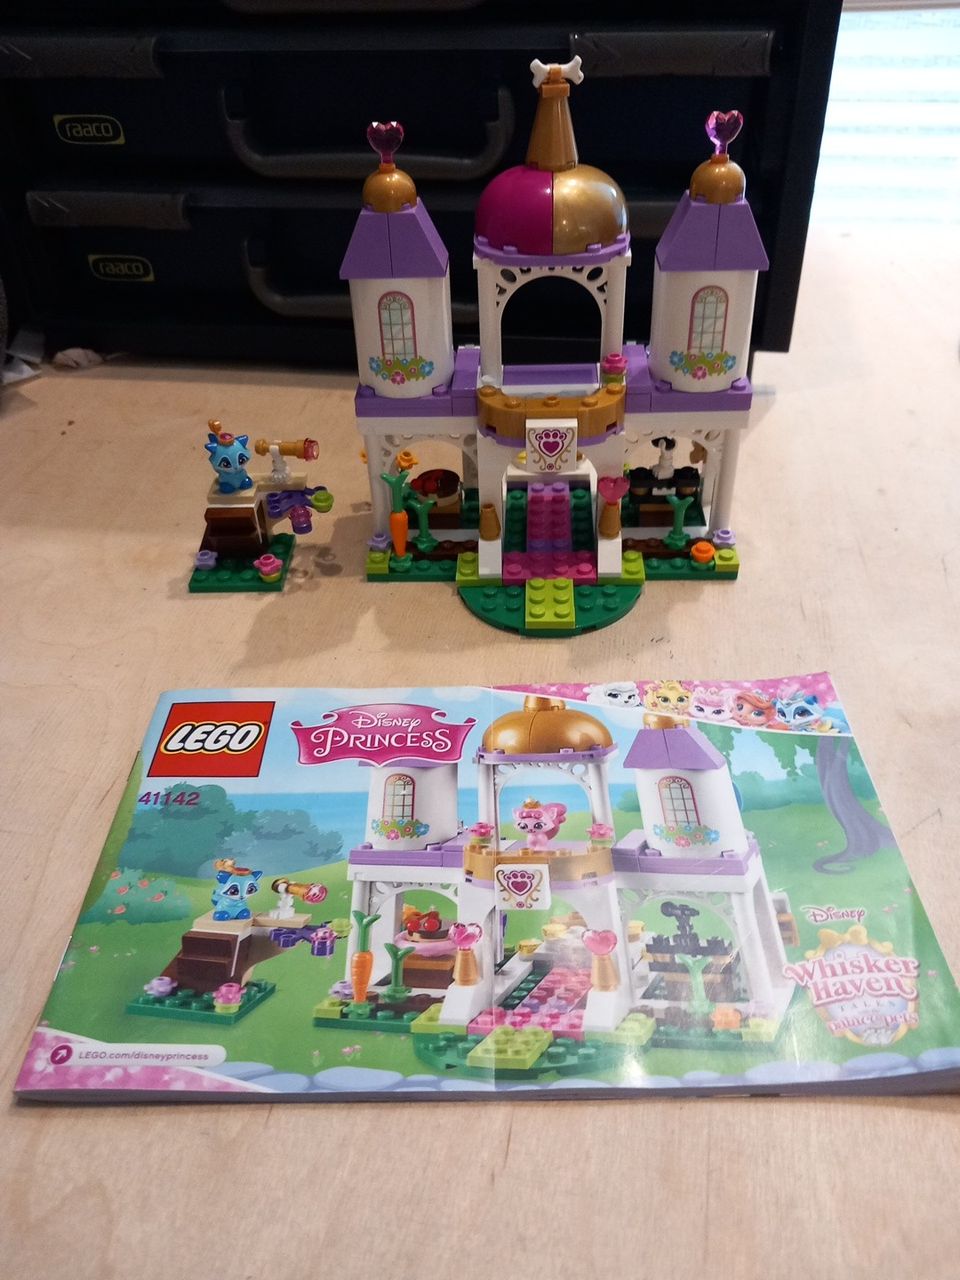 Lego prinsess 41142